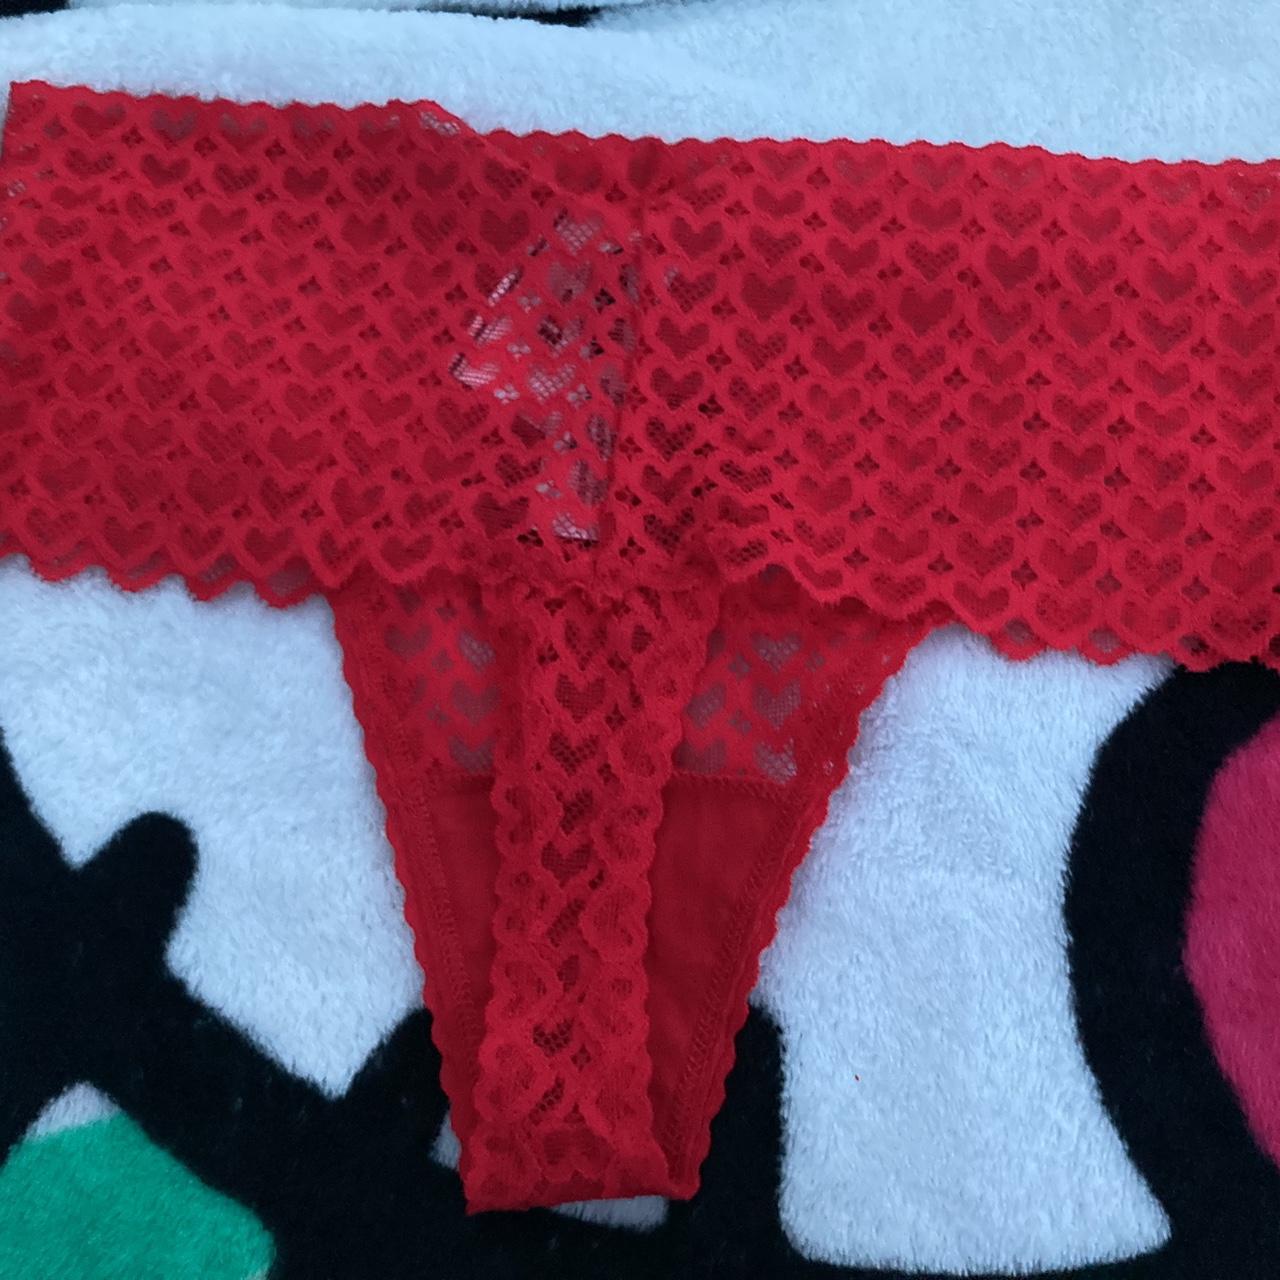 BNWT hot pink lace cheetah print panties from PINK - Depop